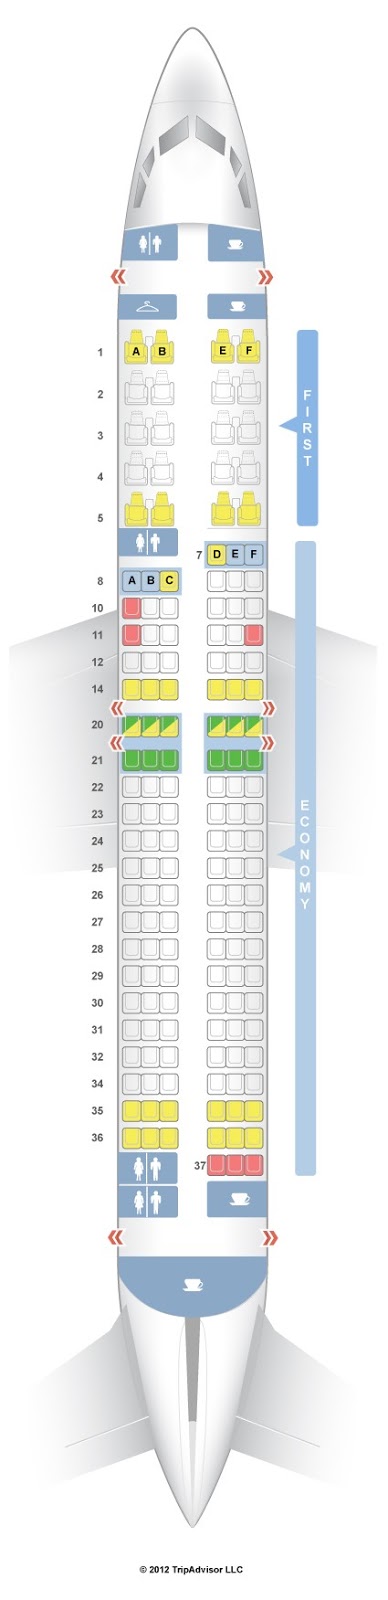 737 800 American Seating Chart